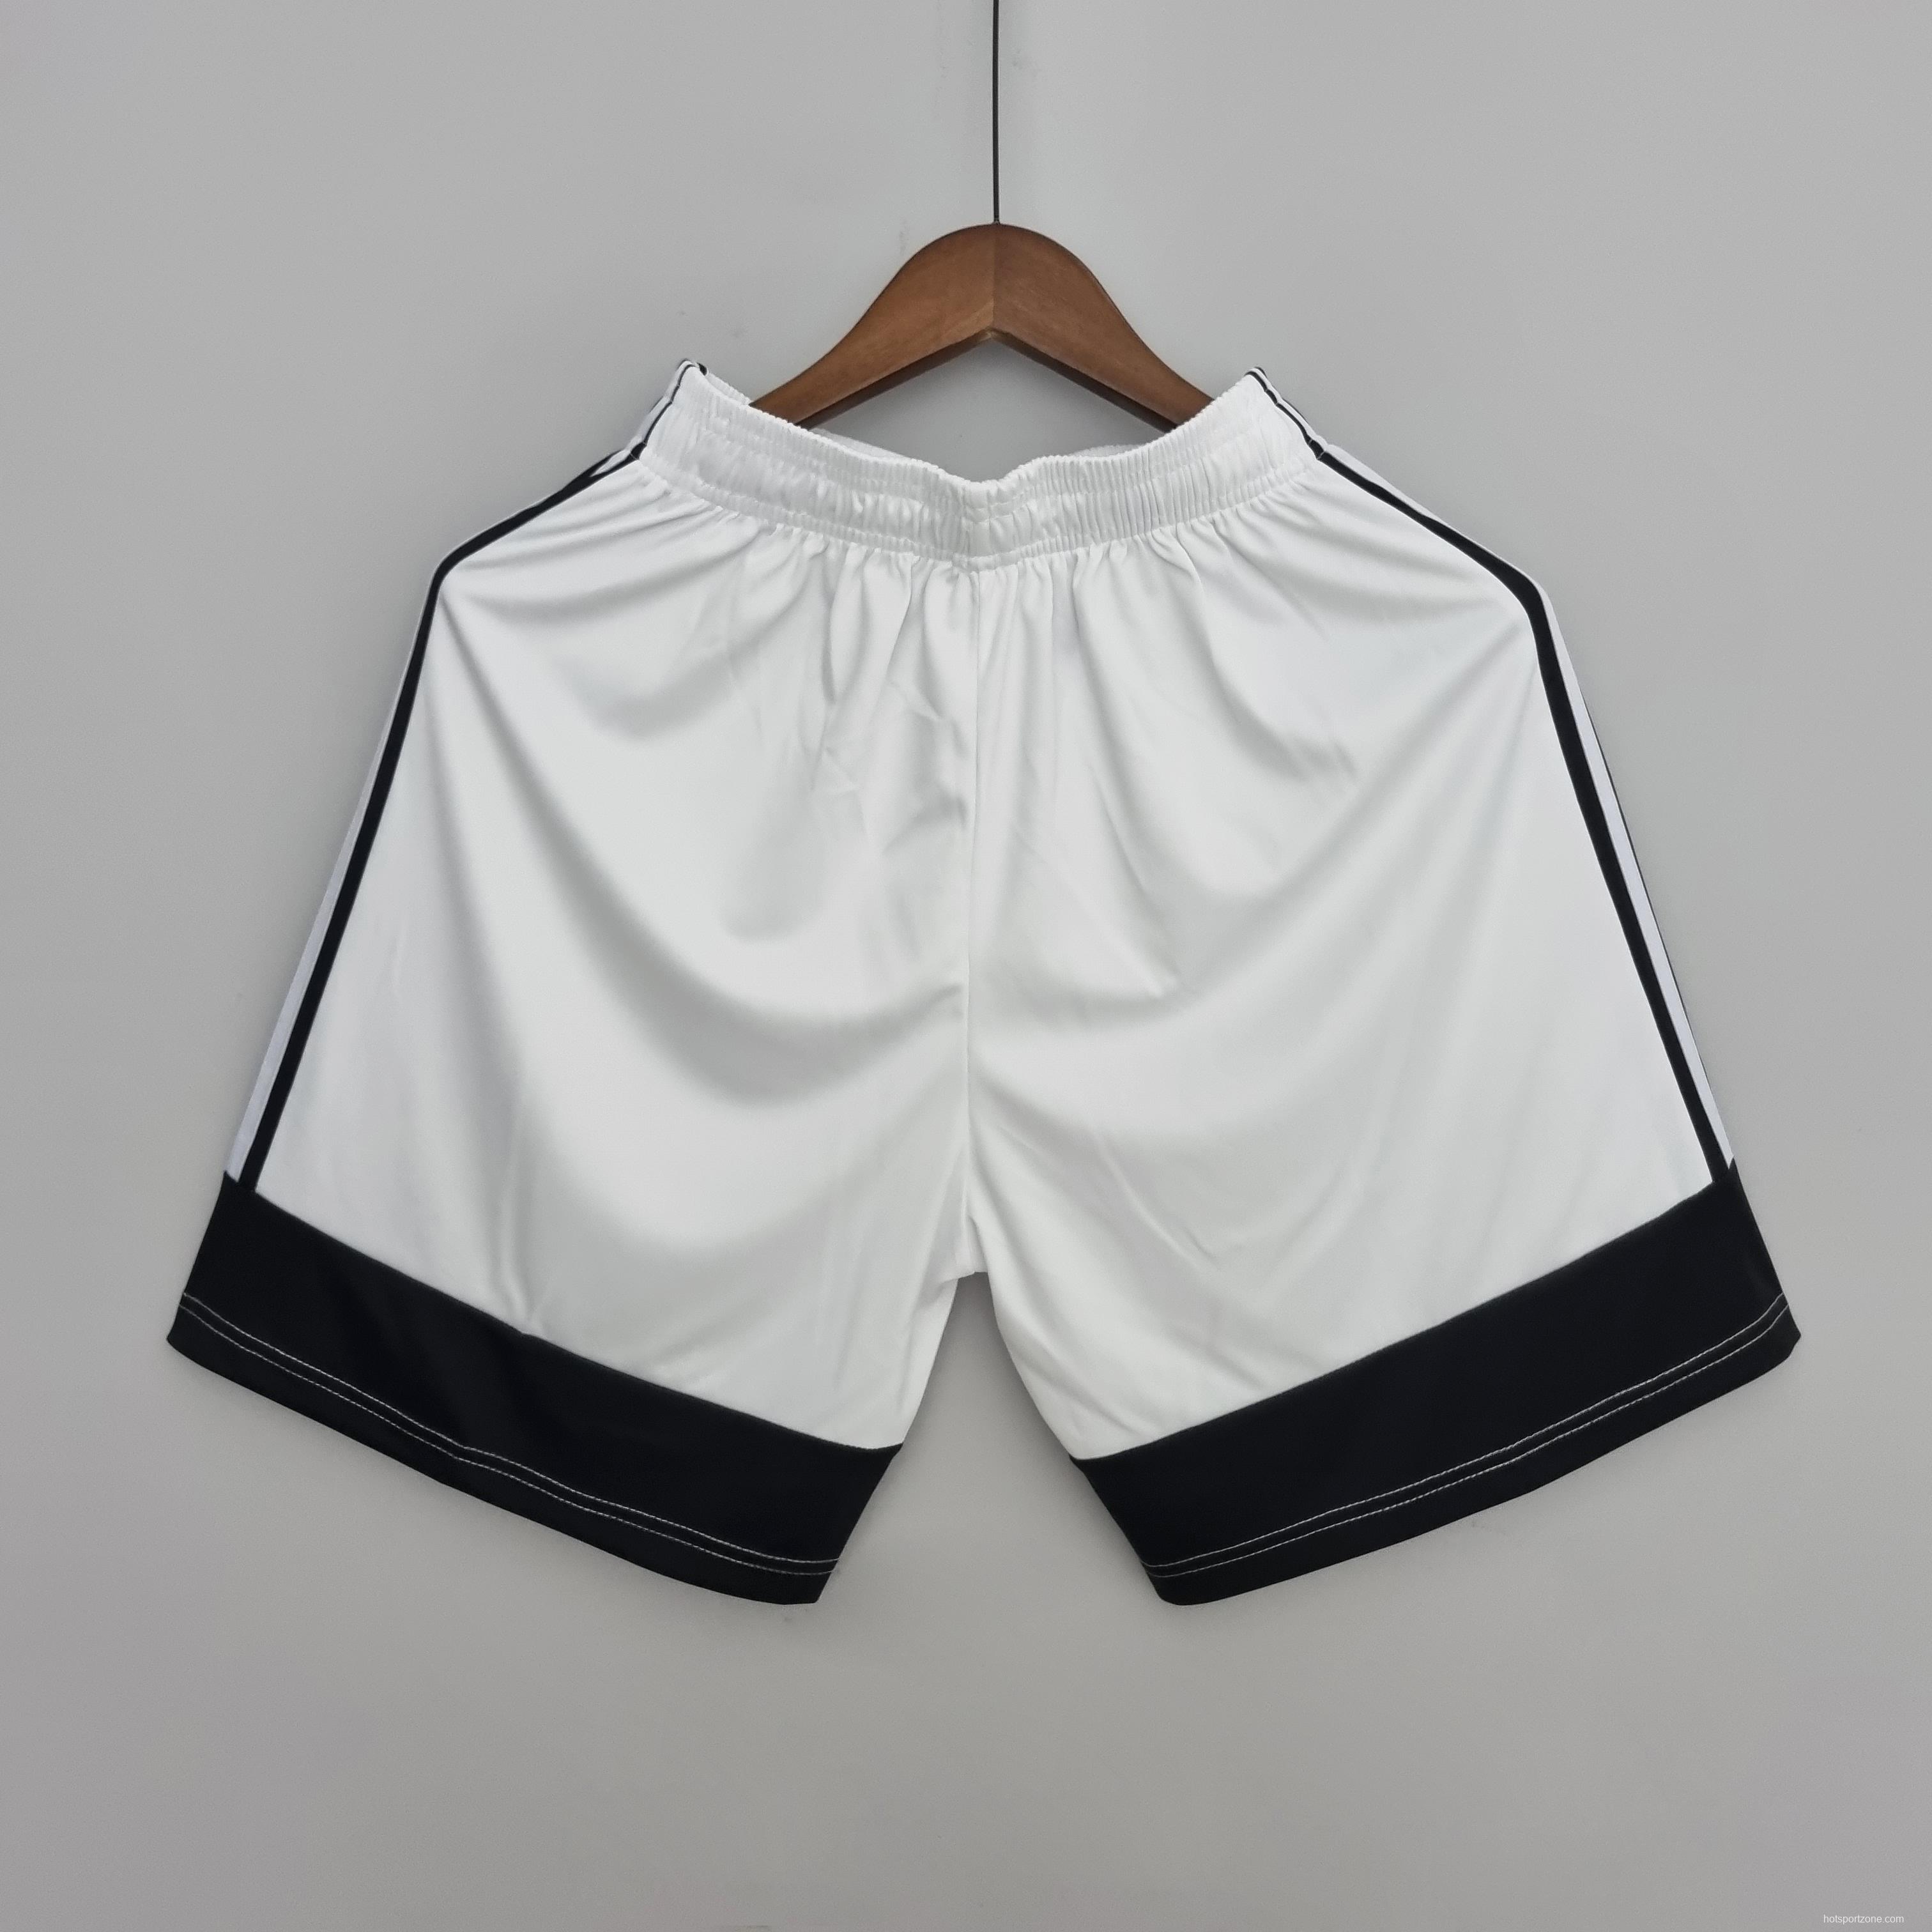 22/23 colo colo shorts white Soccer Jersey